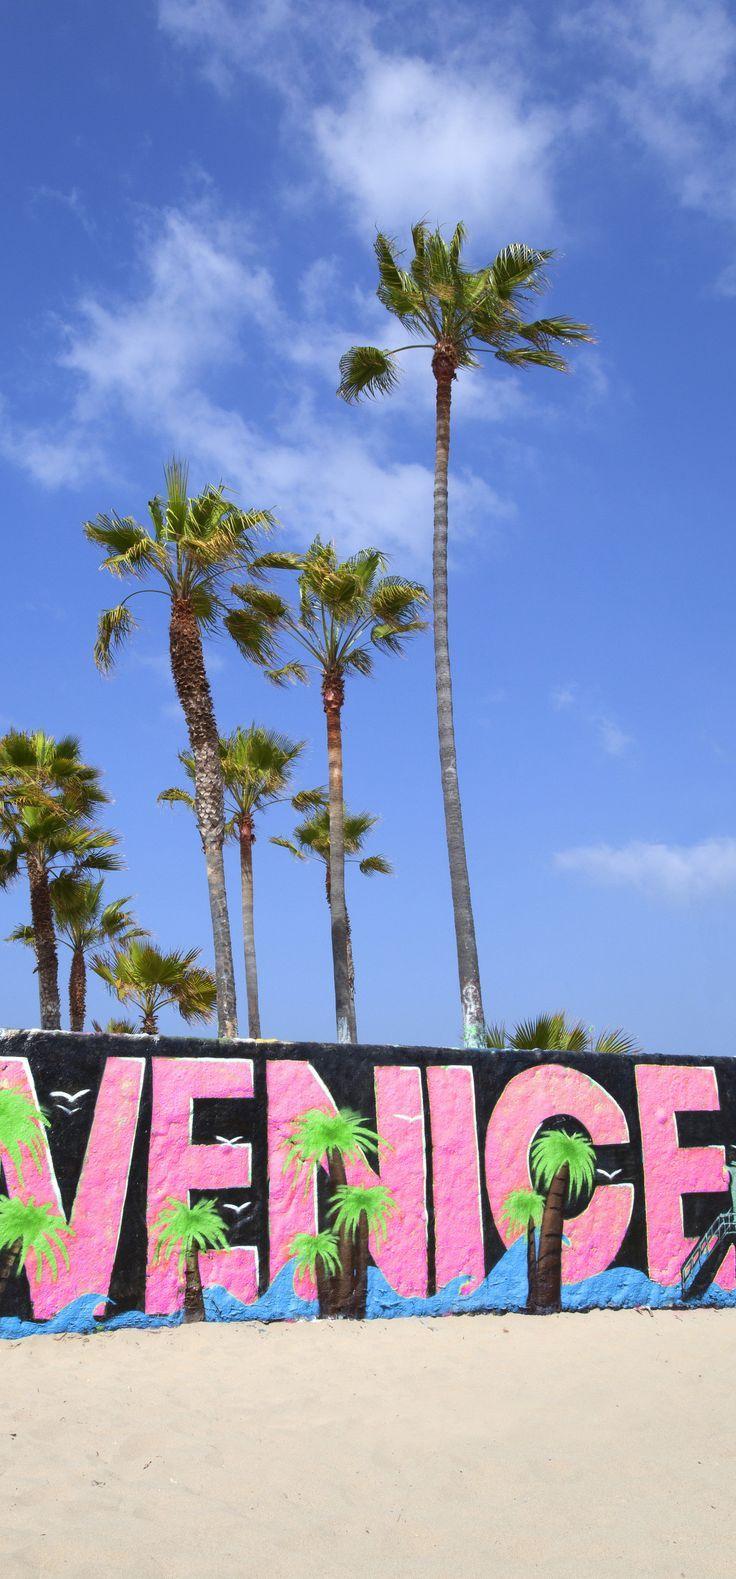 Venice Beach, California, USA Customized skincare made